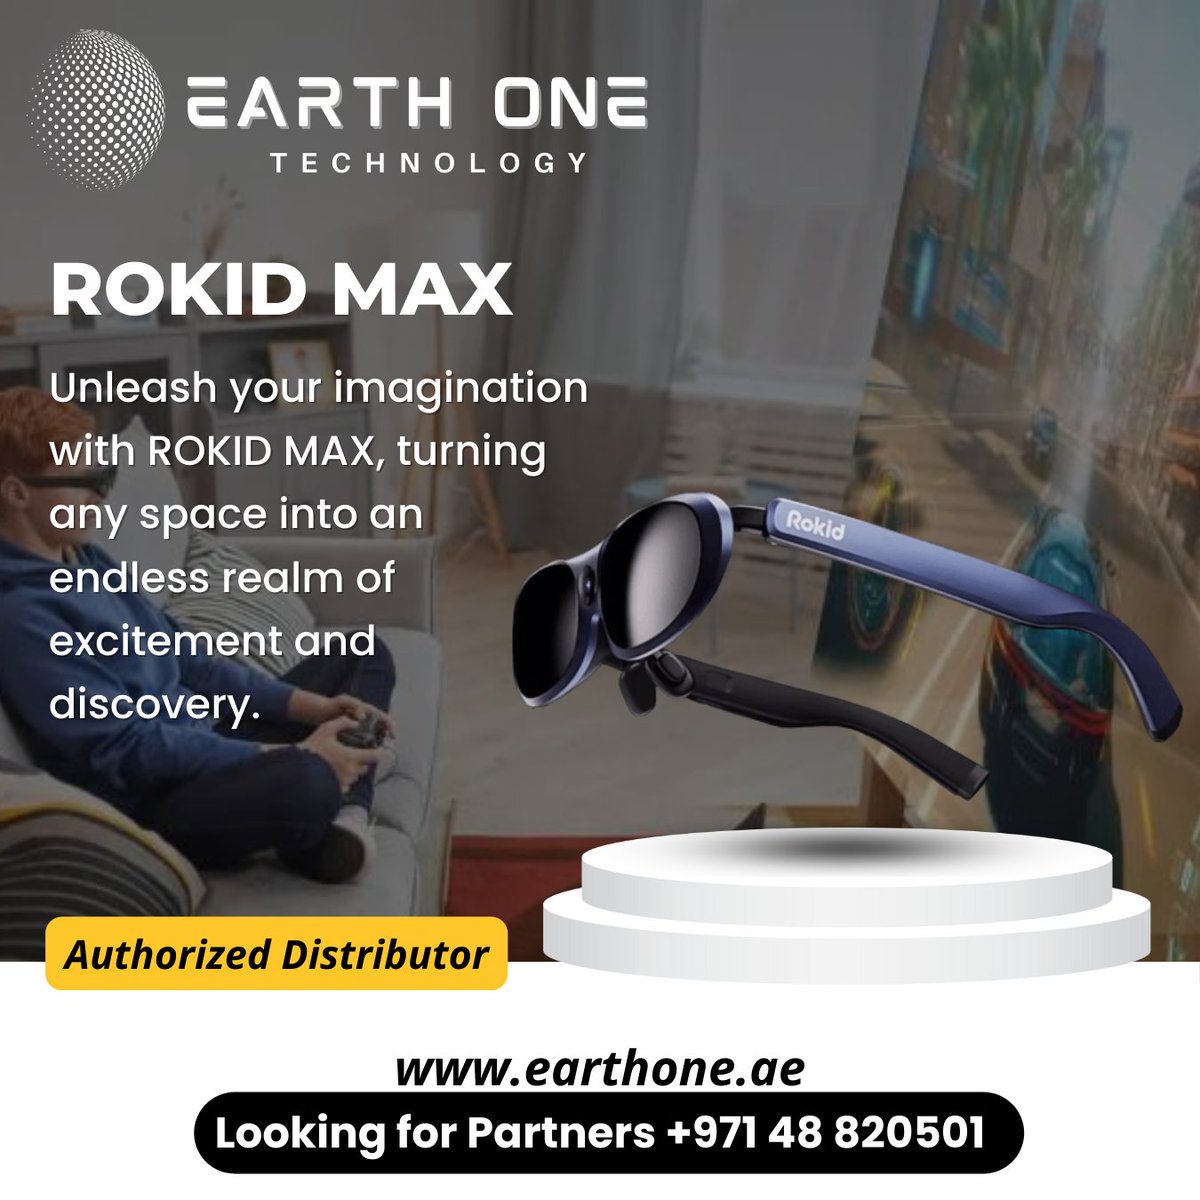 #earthone Rokid Max AR glasses

smpl.is/8oxsx

#earthonedubai #smarttech #dubaitech #earthonetec #earthonetech #gcc #arglasses #rokidmax #rokidmaxglasses #rokidglasses